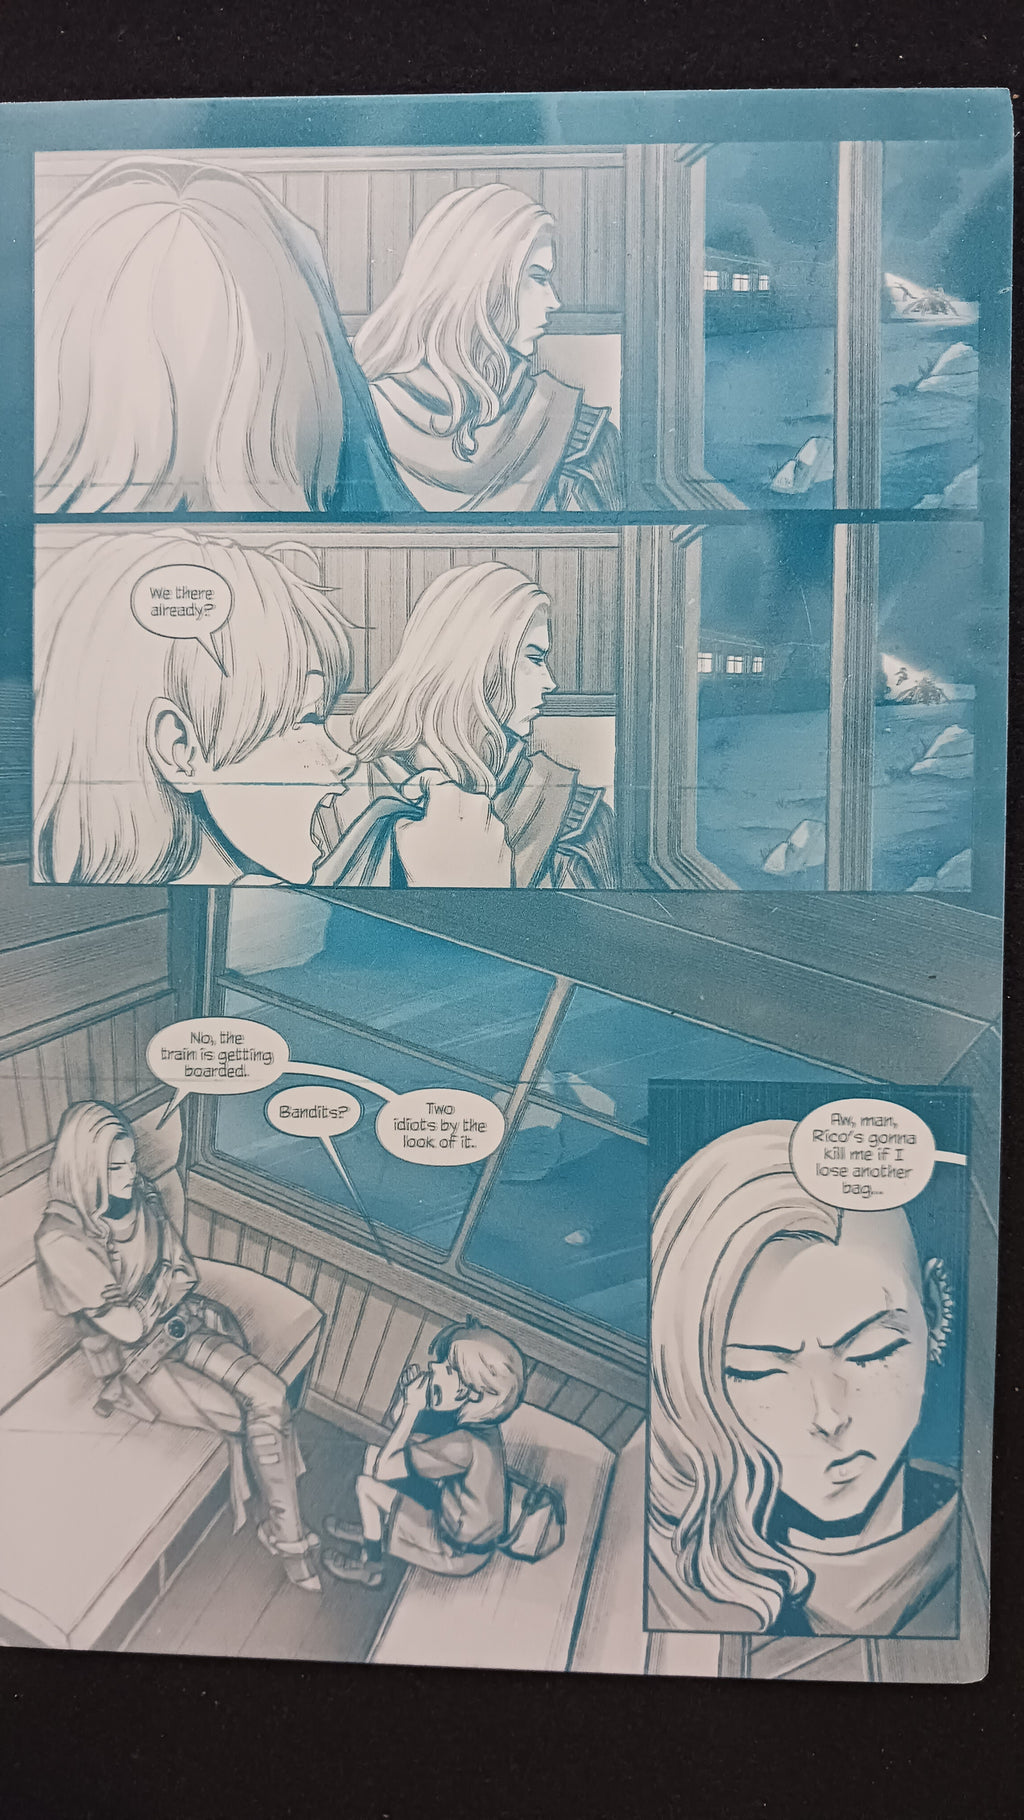 Agent of W.O.R.L.D.E #2 - Page 26 - PRESSWORKS - Comic Art -  Printer Plate - Cyan